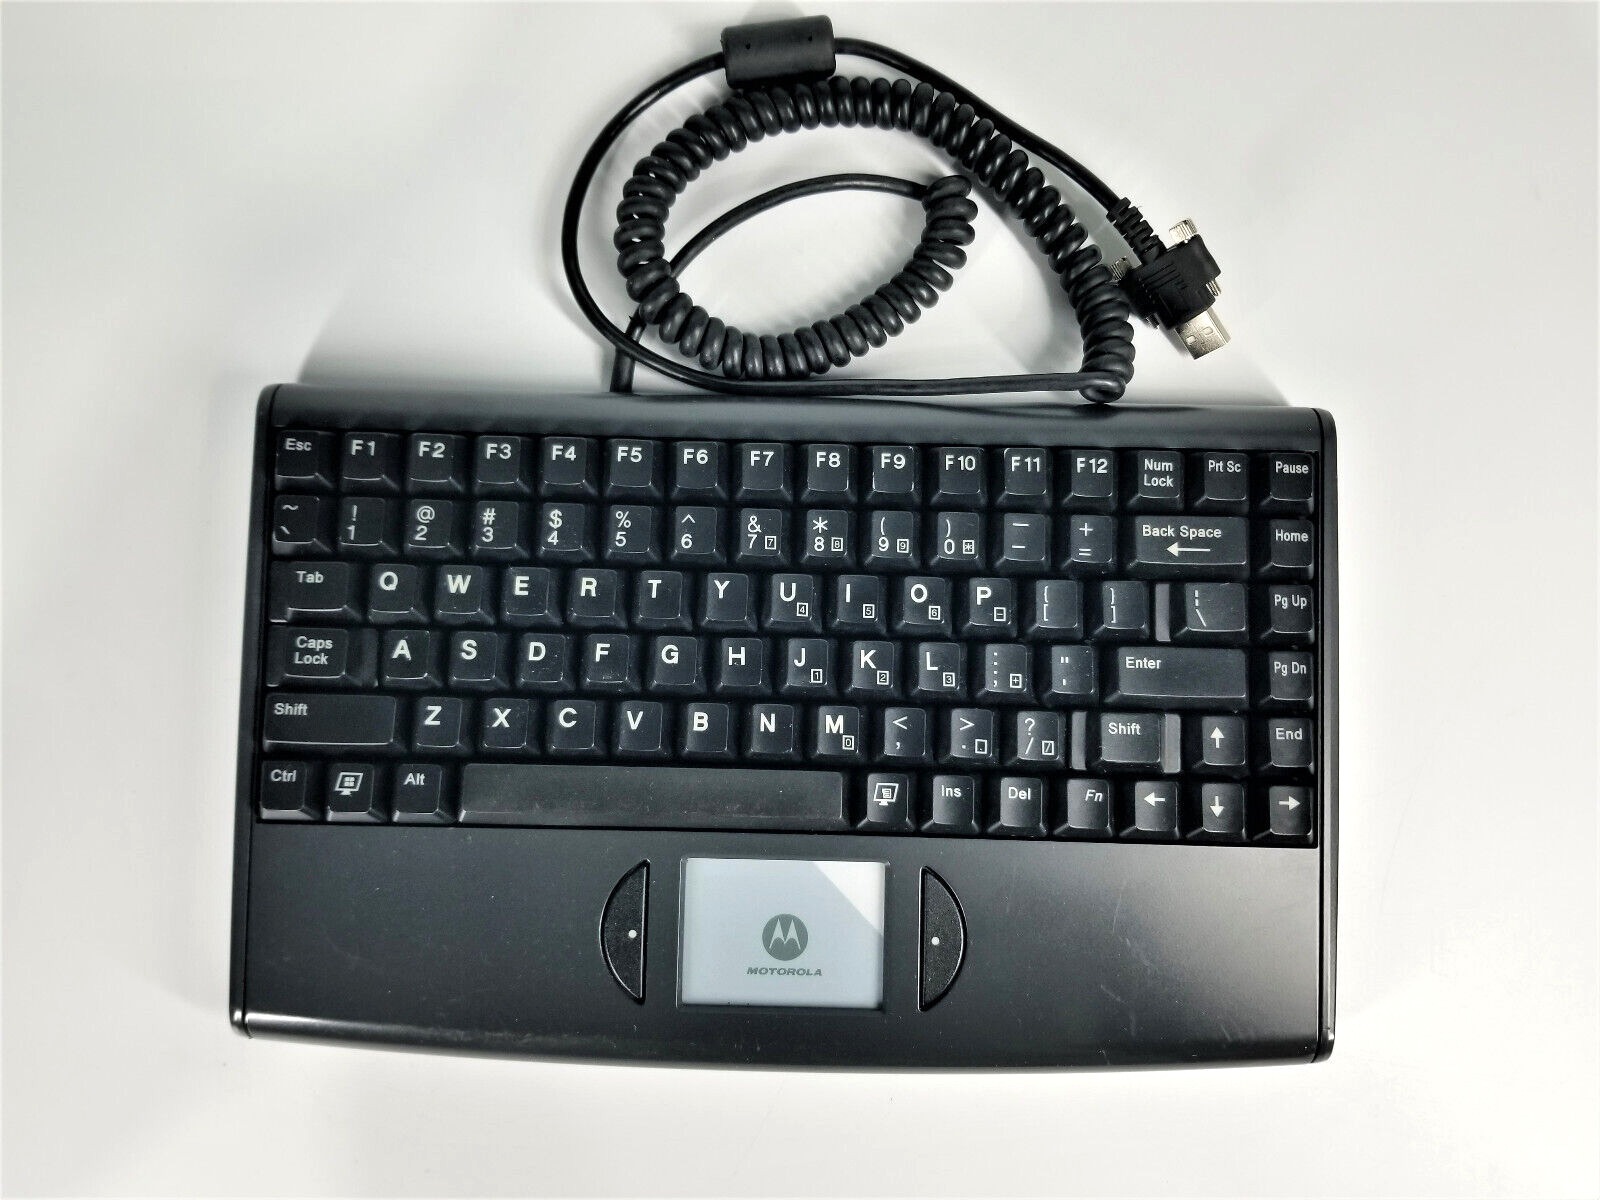 Motorola rugged Keyboard FLN3673A for Police Mobile Computer MDT F5208, F5207A